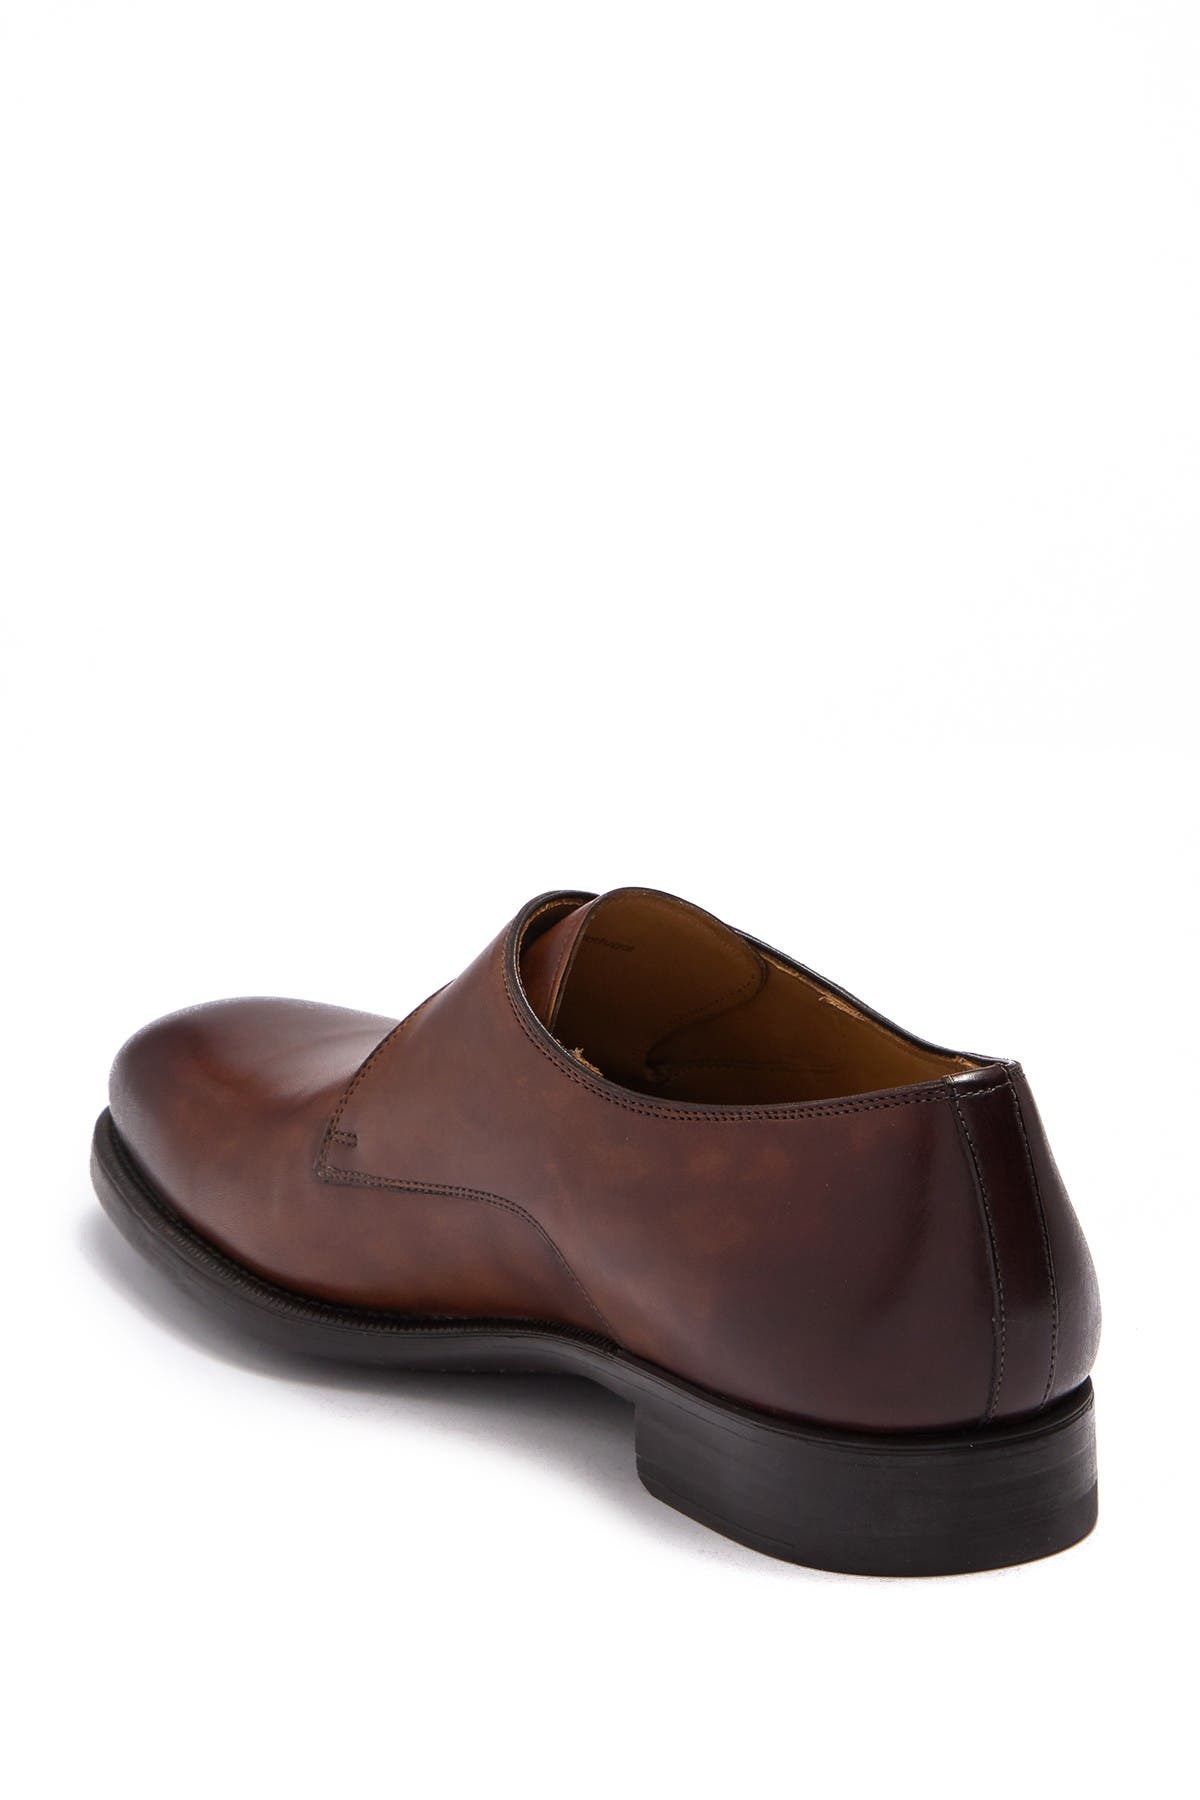 magnanni carey leather monk loafer